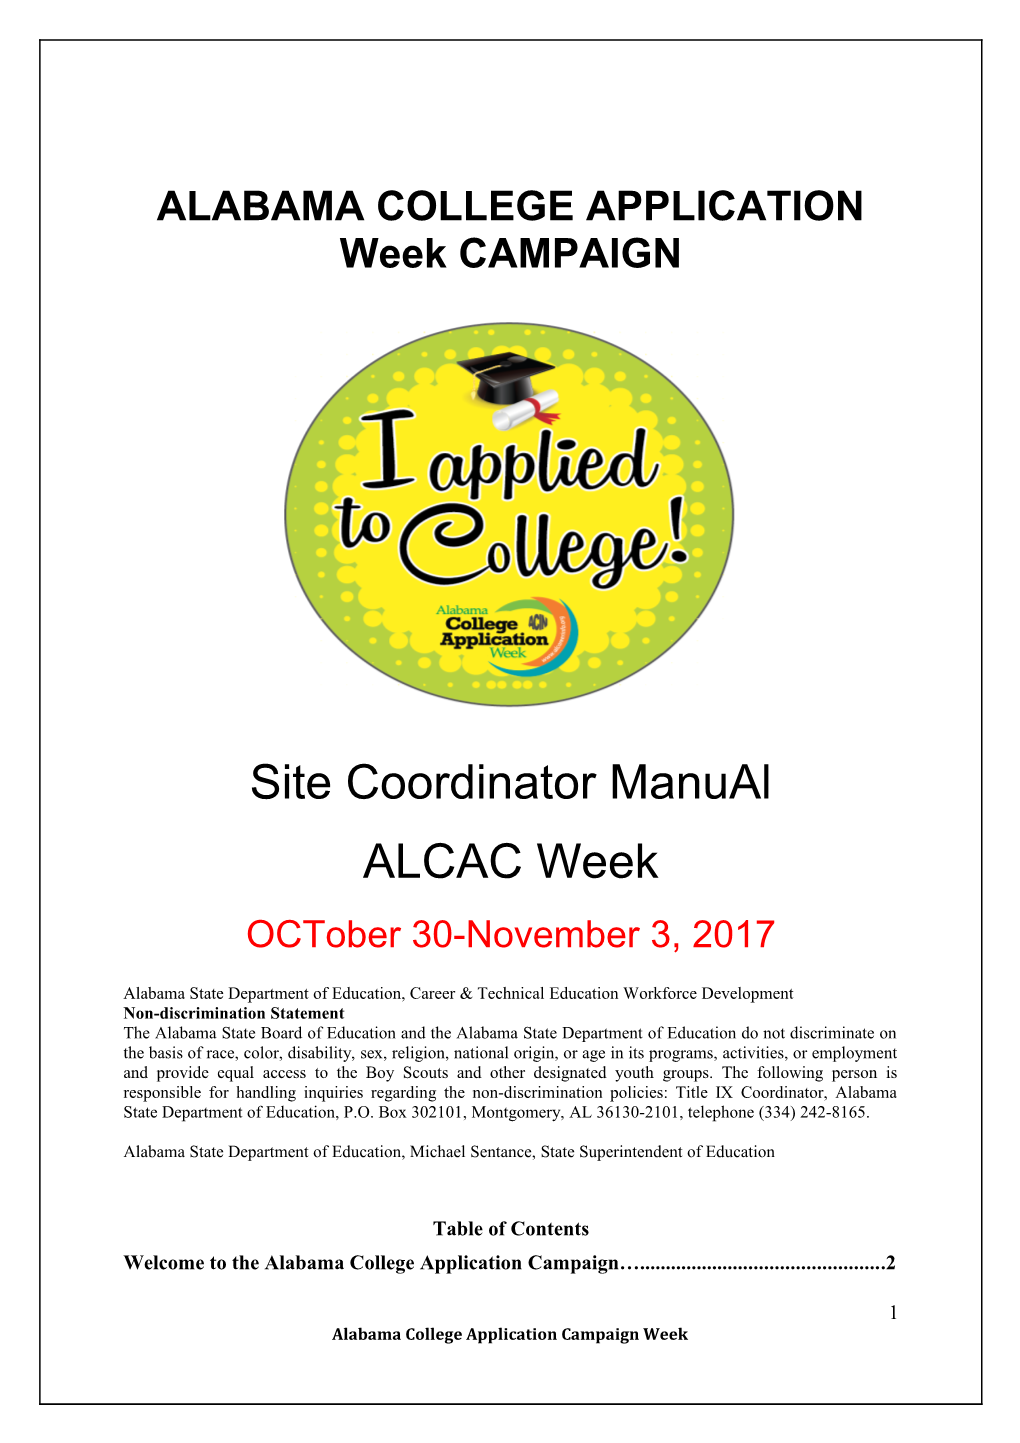 ALCAC Site Coordinator Manual_201718